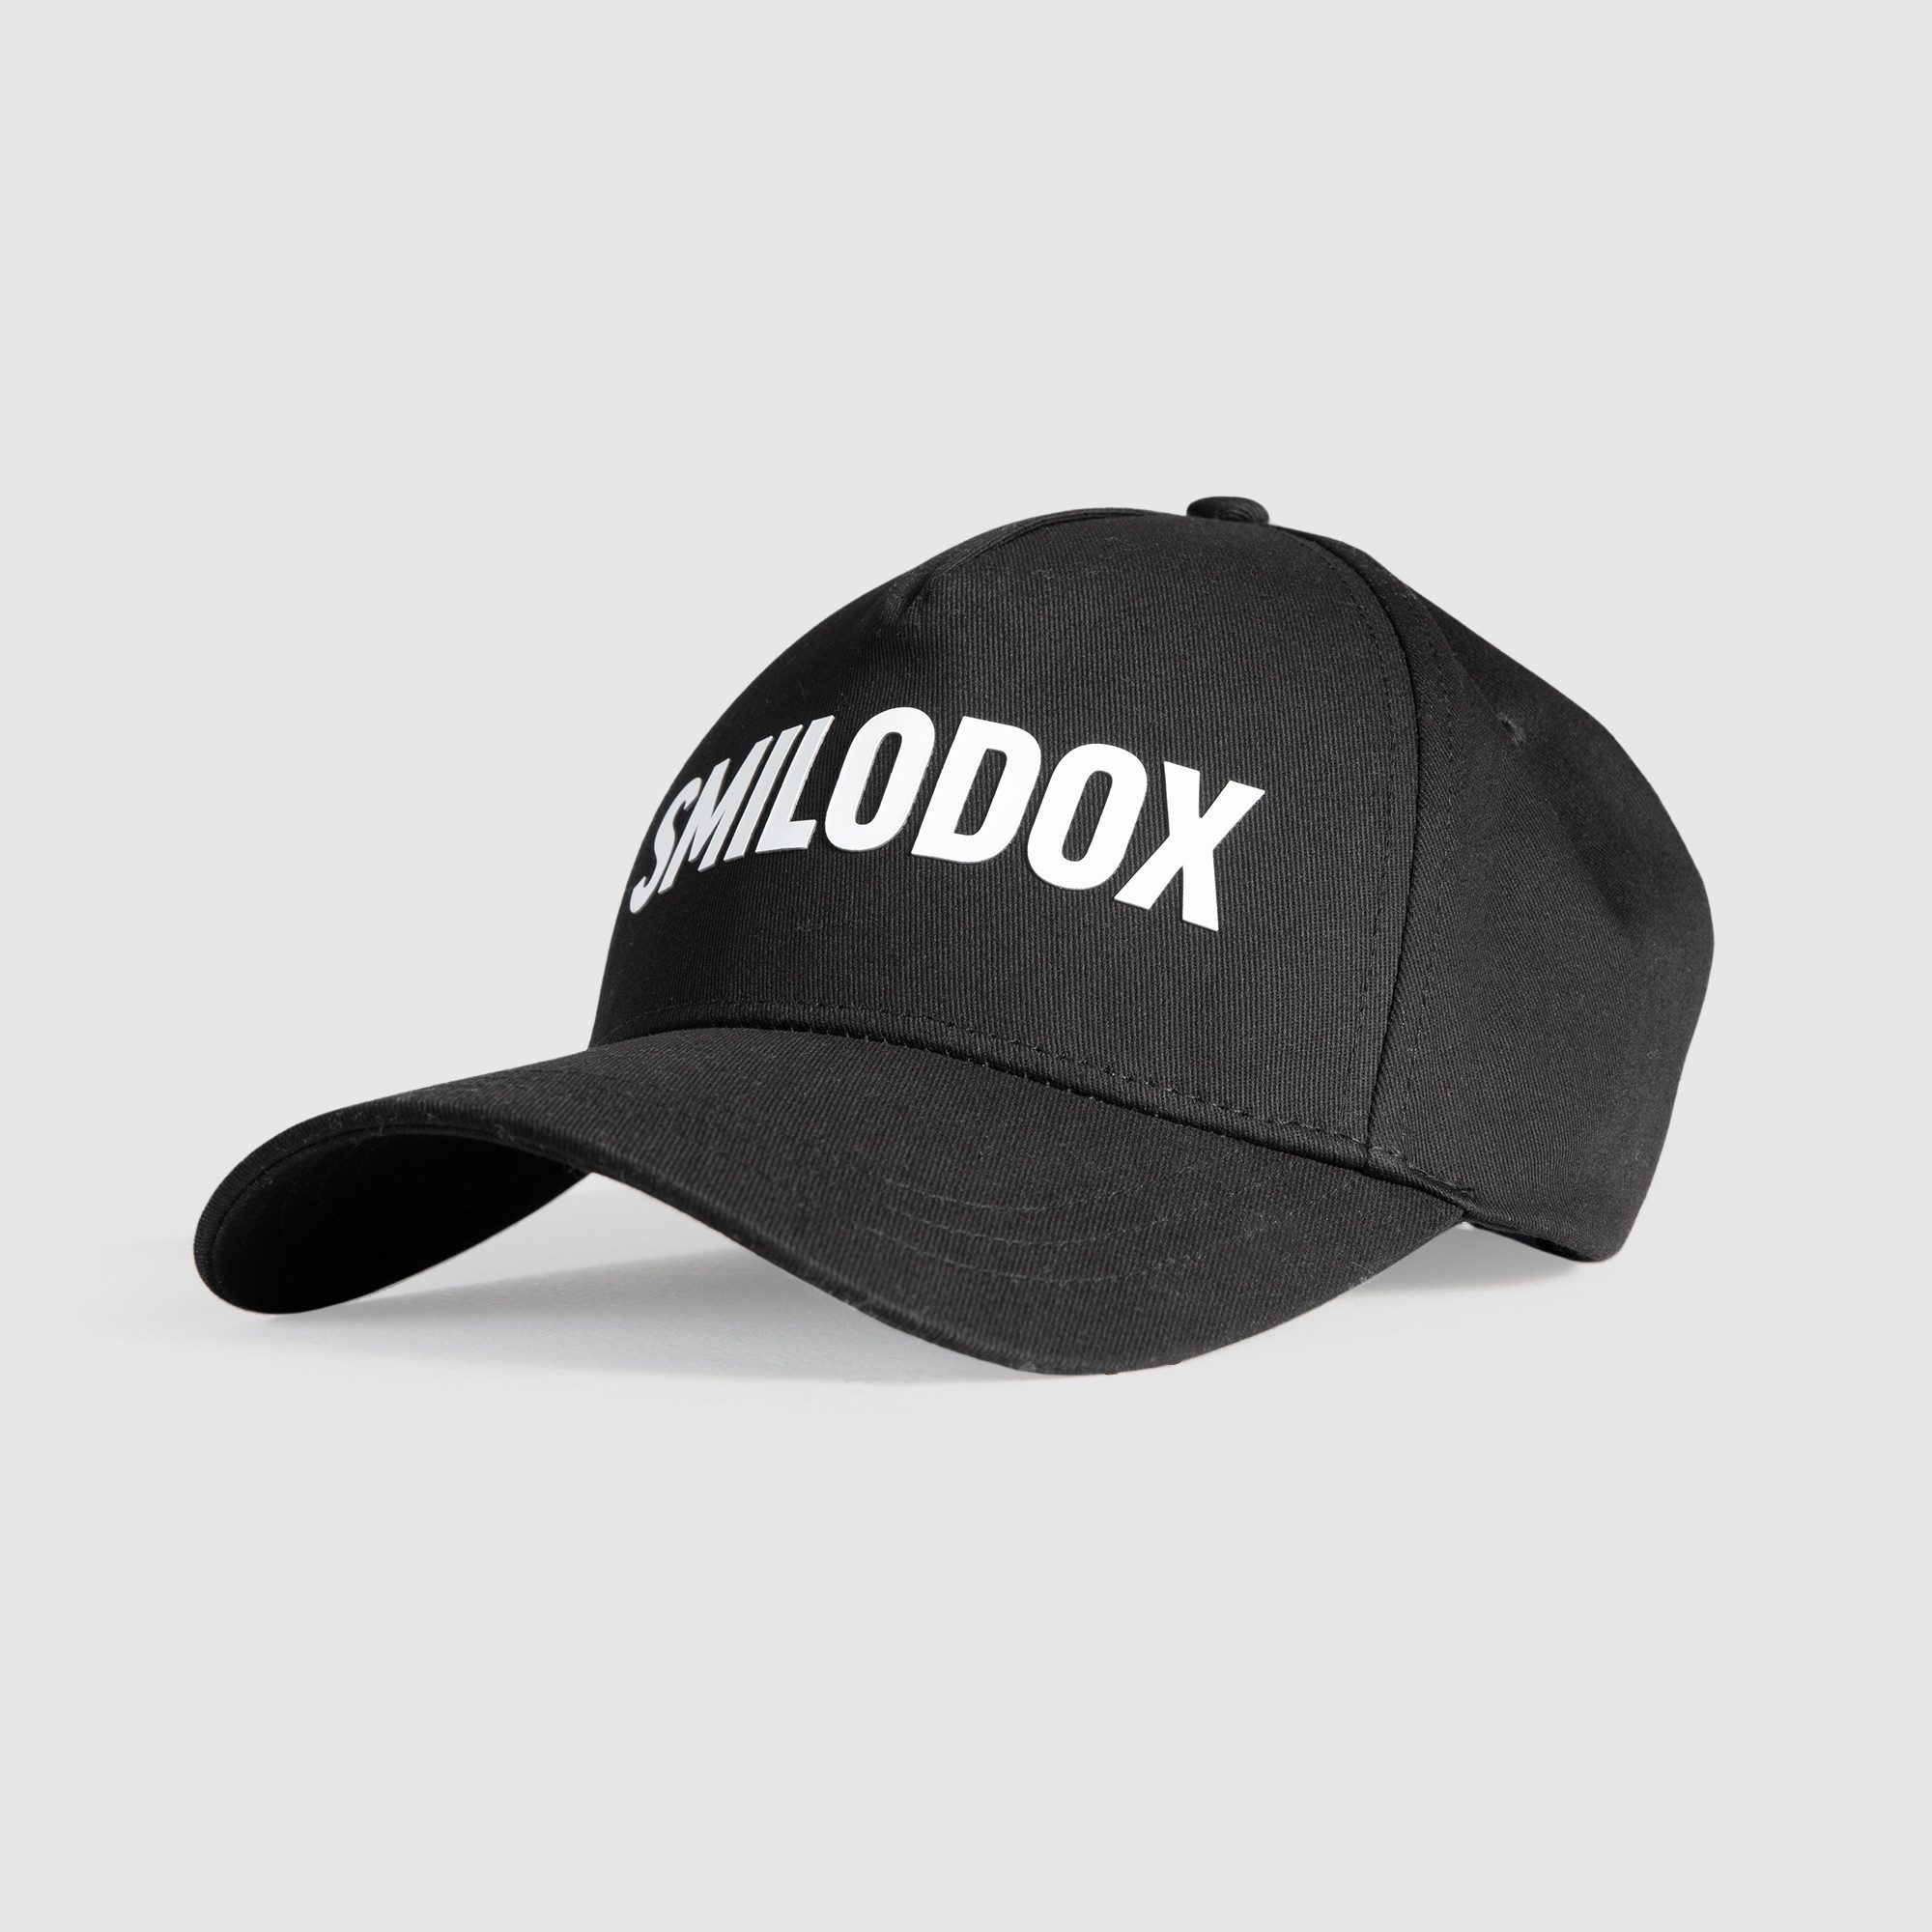 Smilodox Flex Cap Raden